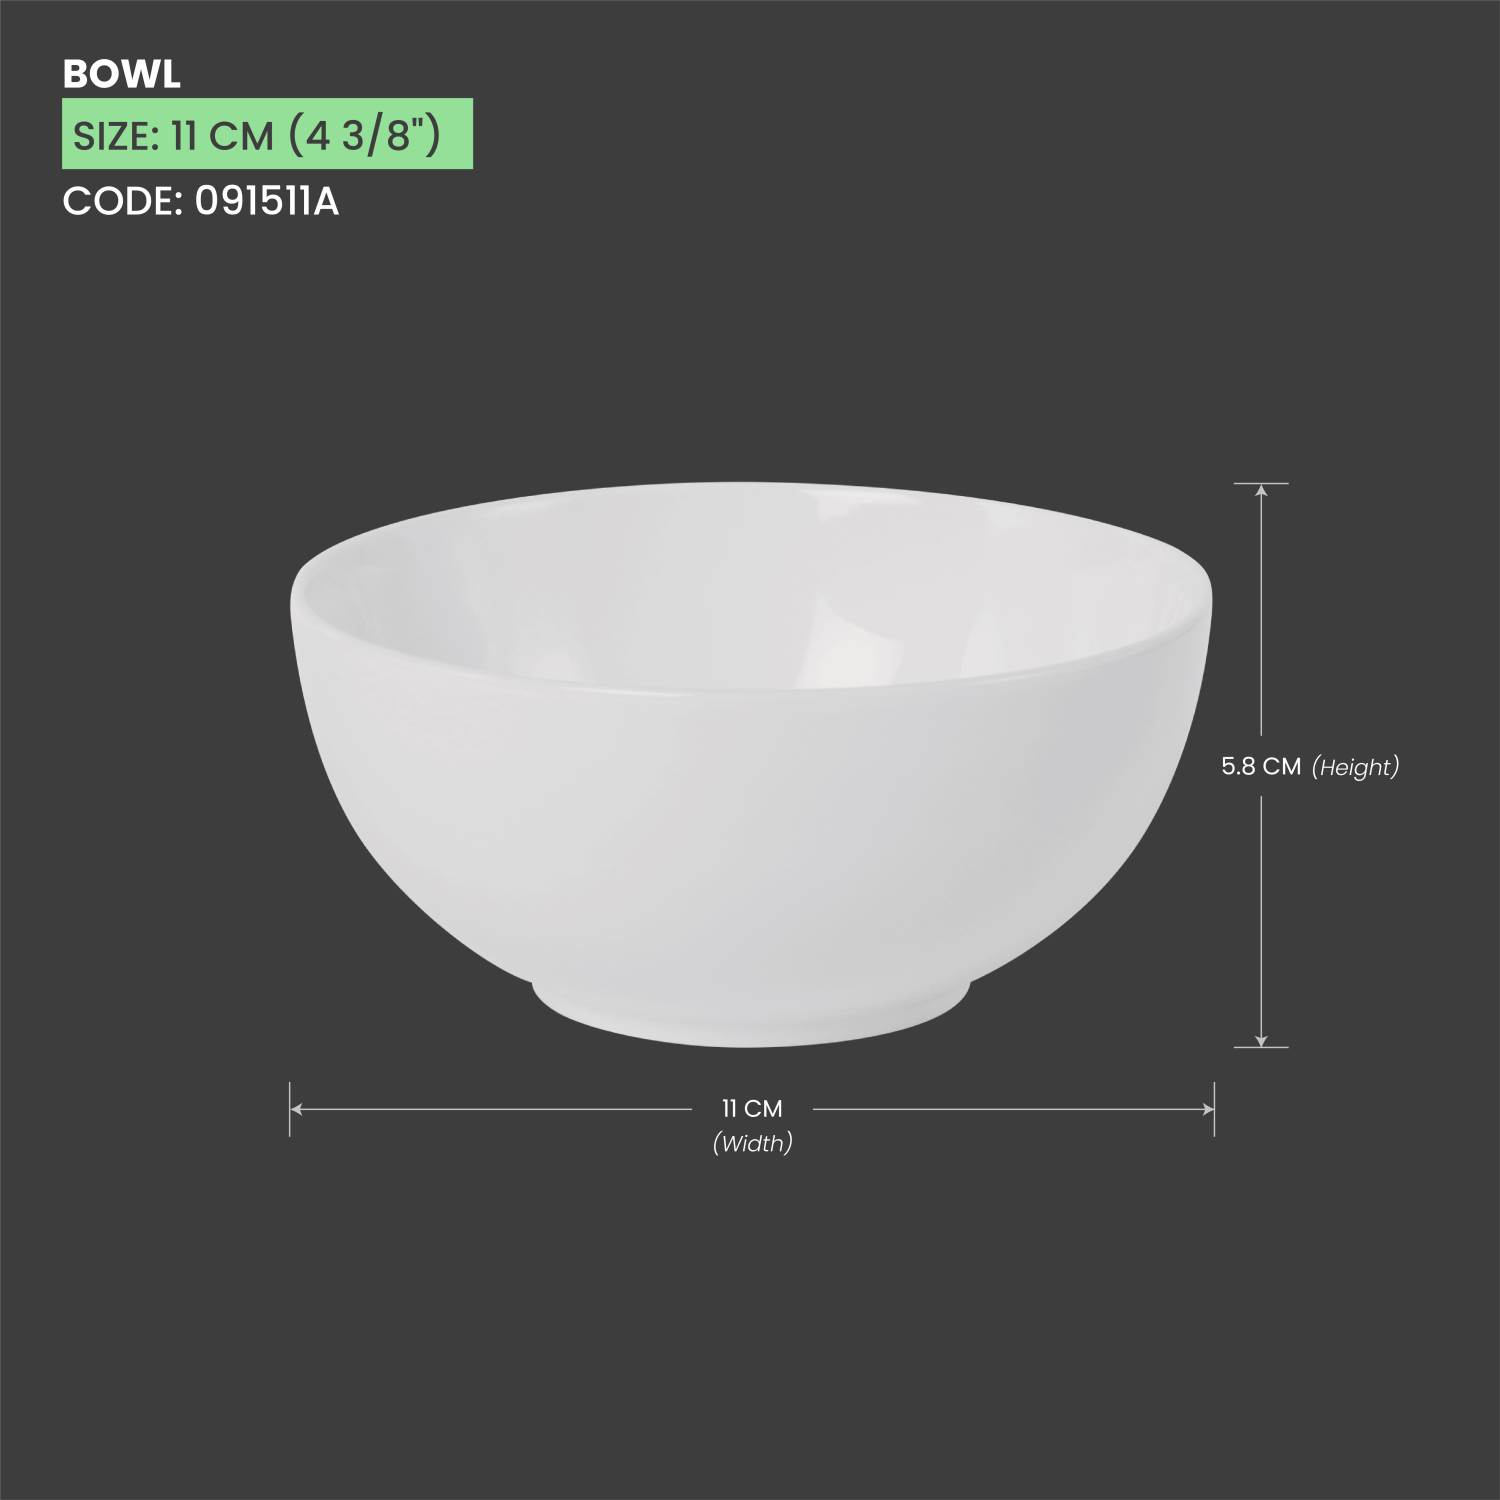 Baralee Simple Plus Bowl 11 Cm (4 3/8")